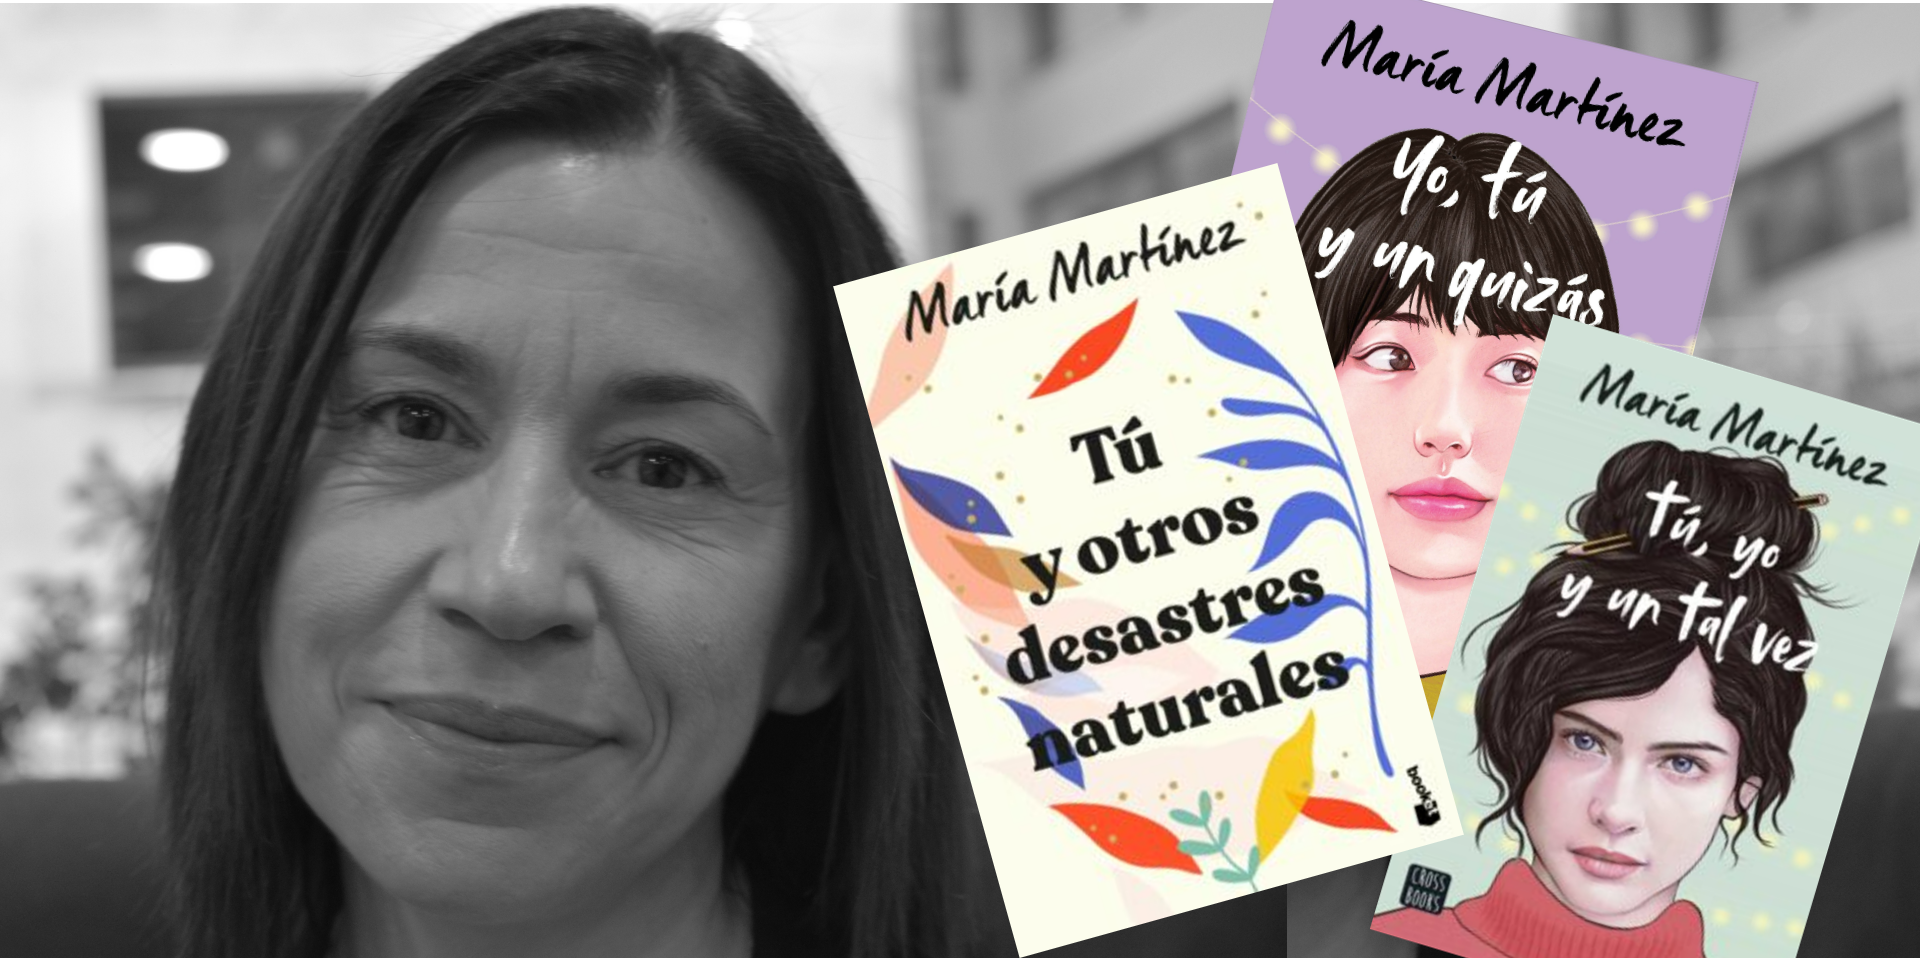 TÚ, YO Y UN TAL VEZ, MARIA MARTINEZ., Crossbooks